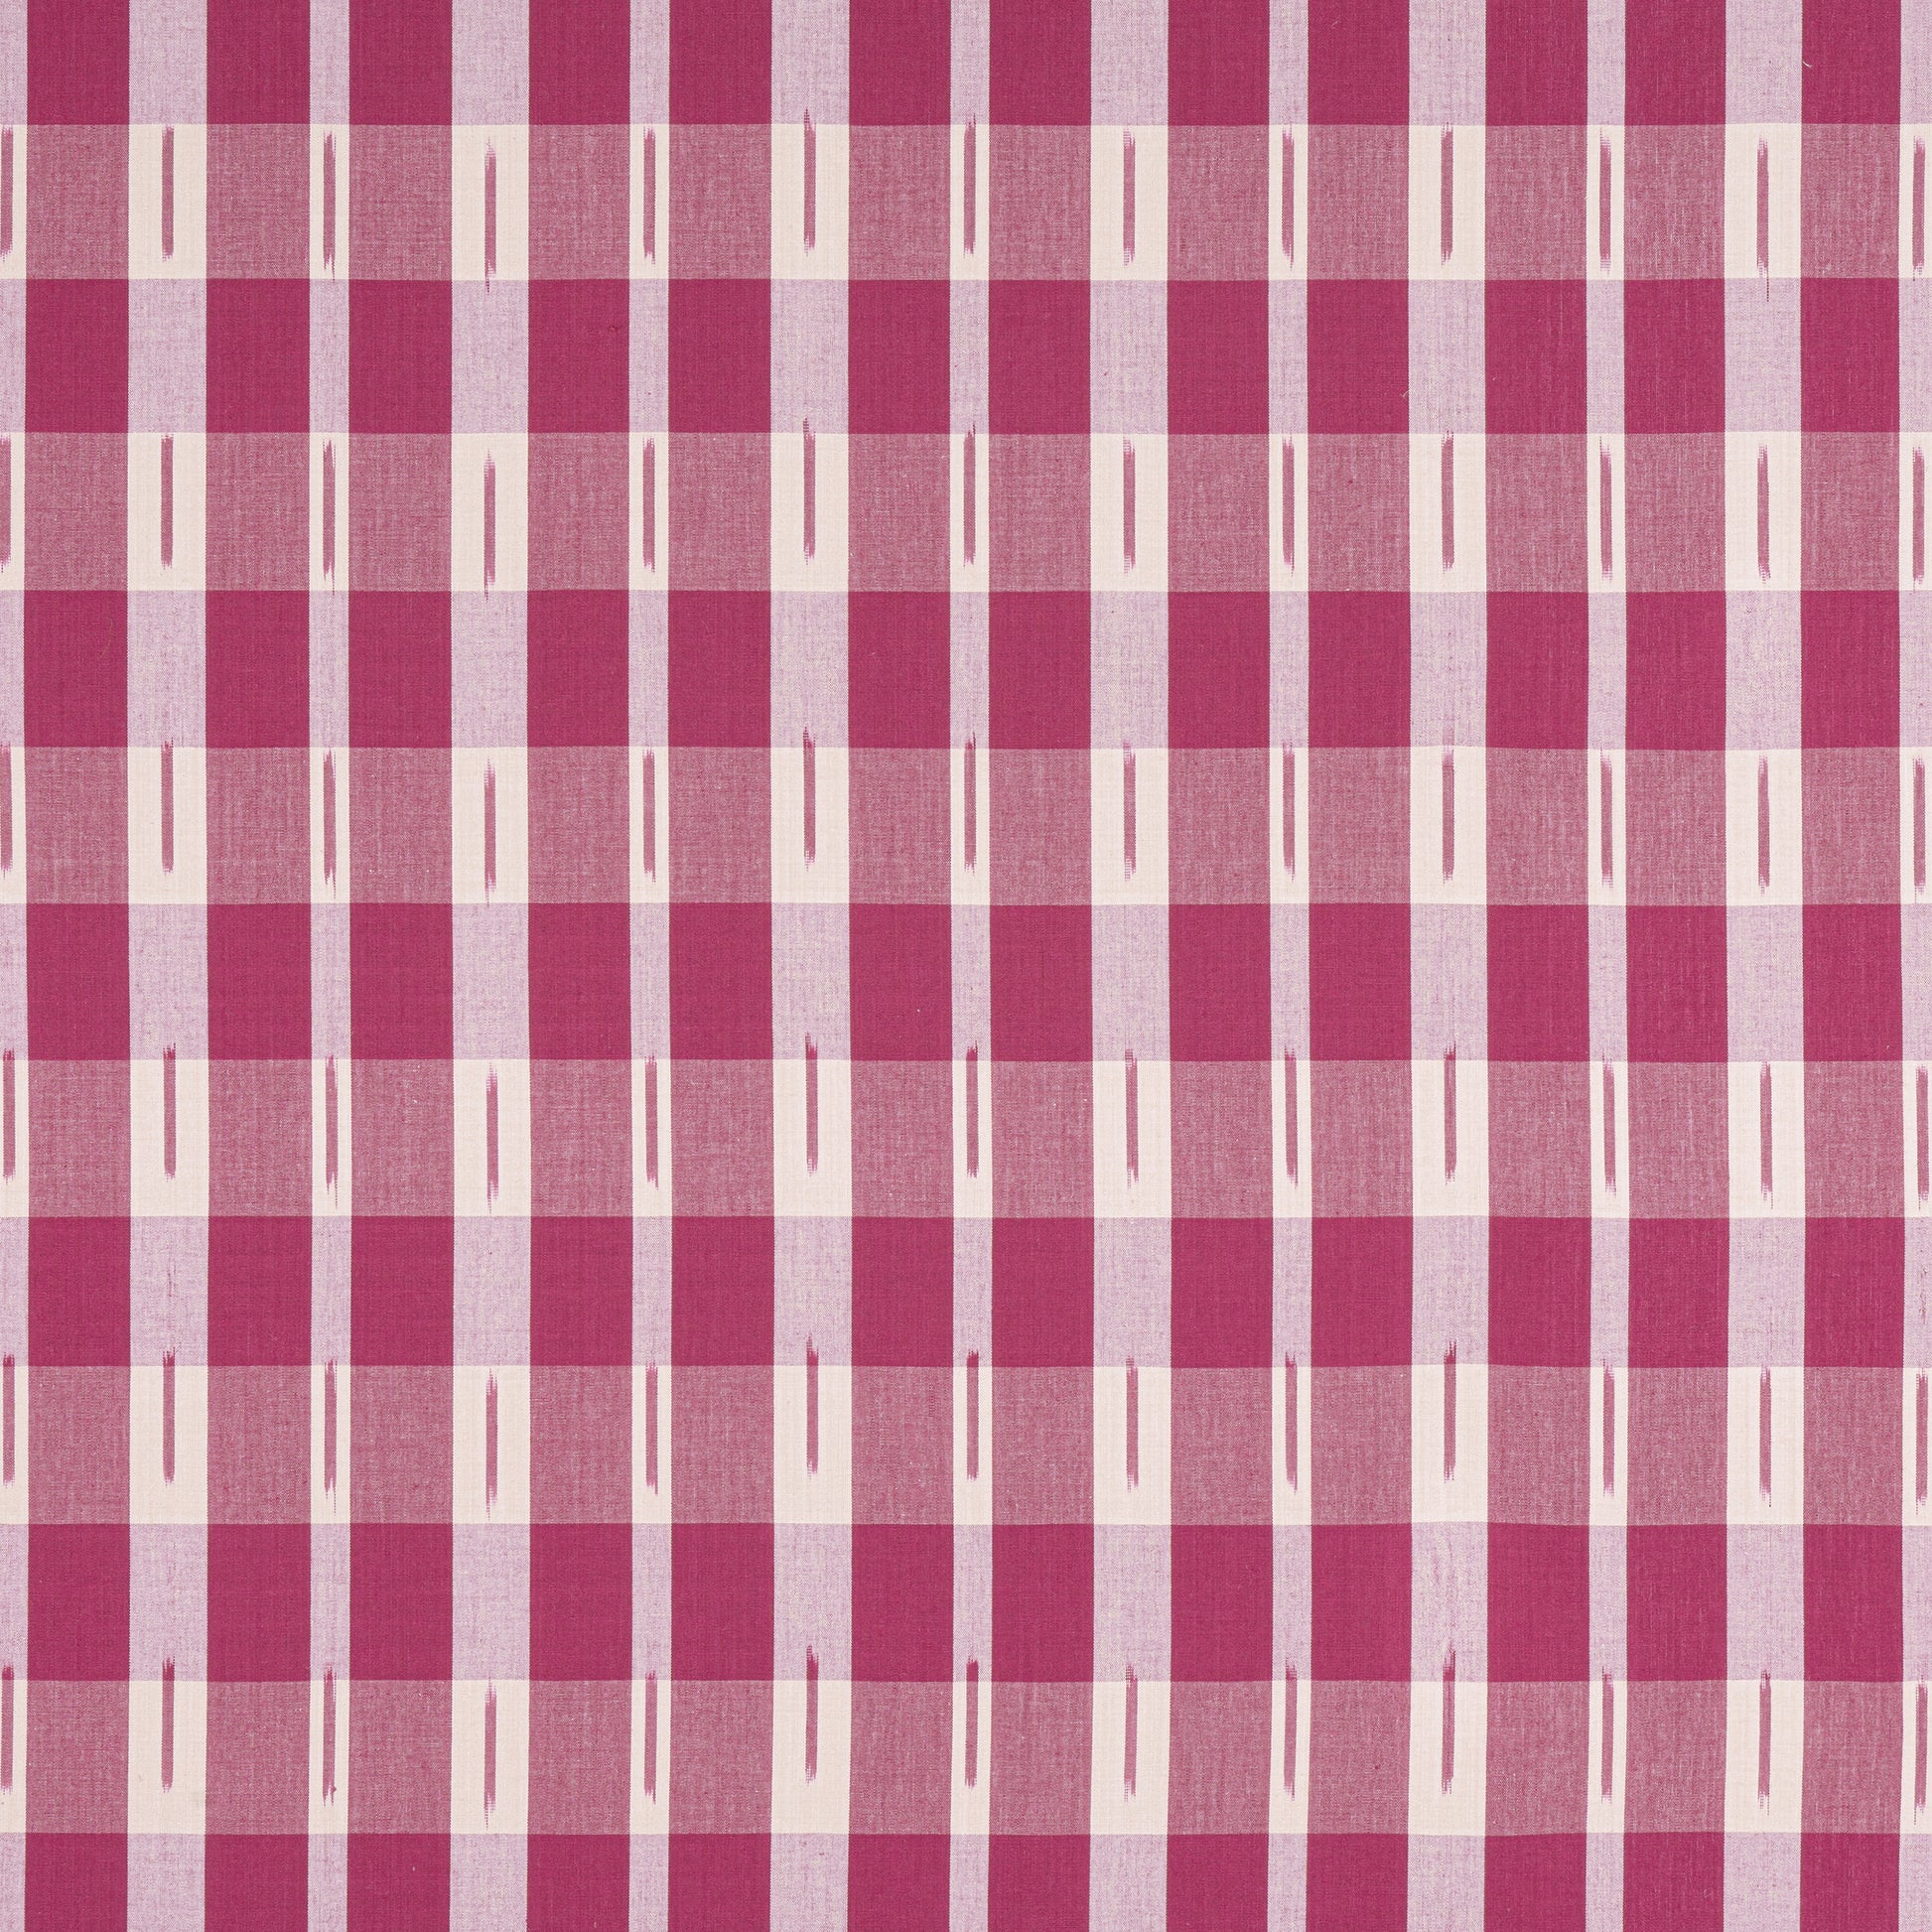 Purchase Thibaut Fabric SKU W736440 pattern name Ellagrey Check color Raspberry